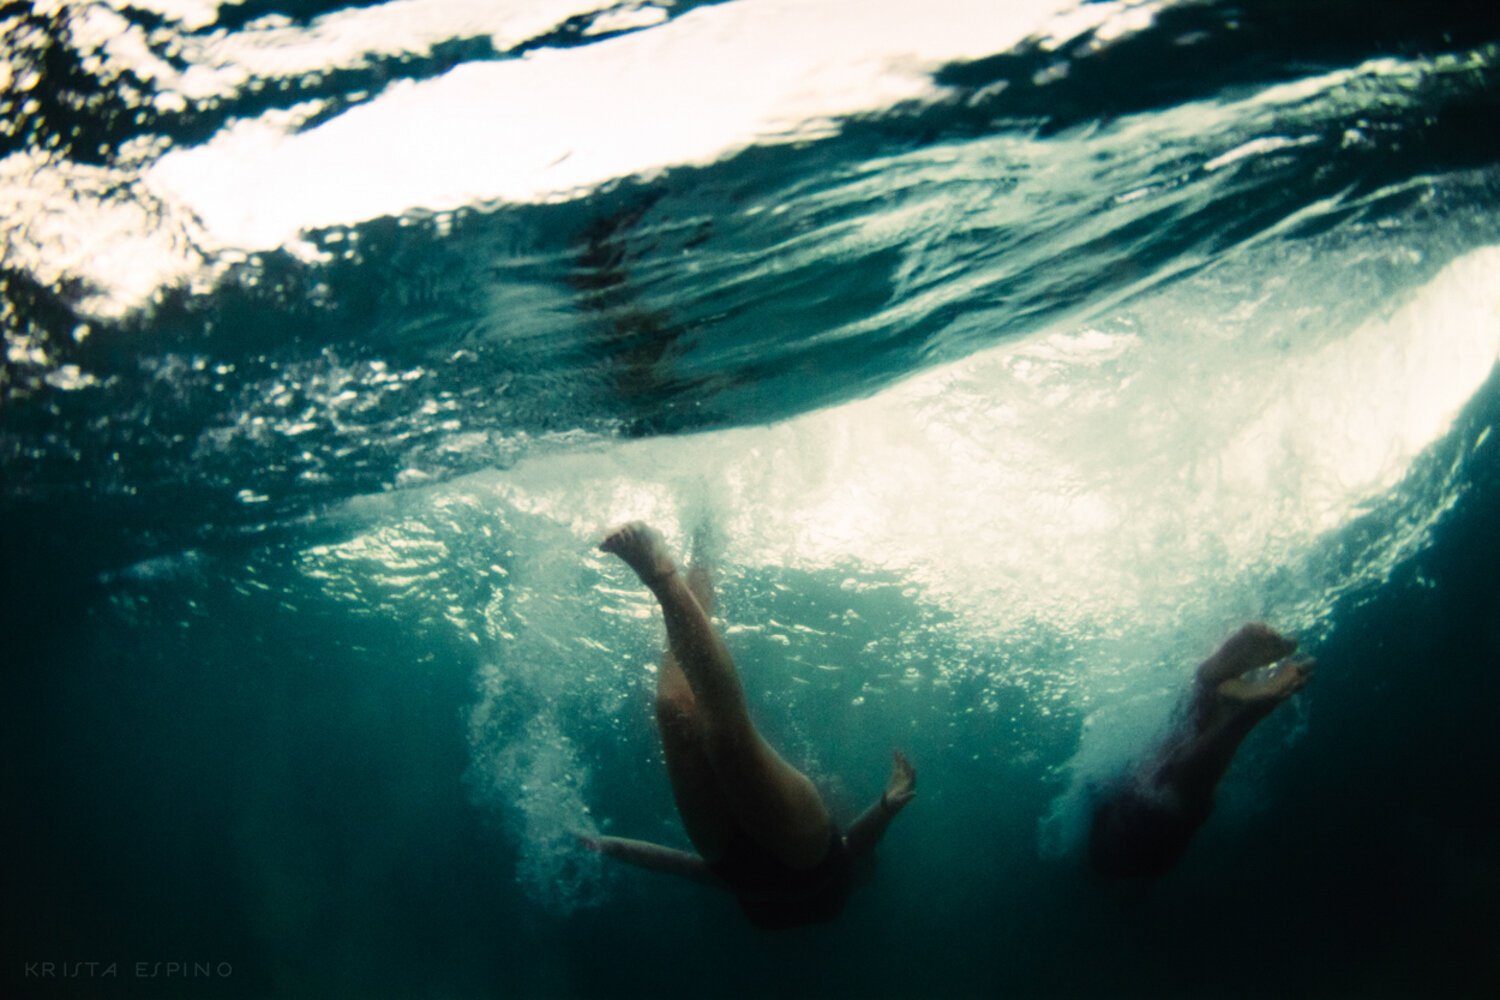 bodysurf waves lifestyle nature photography photographer krista espino travel underwater swim ocean laguna beach_-9.jpg